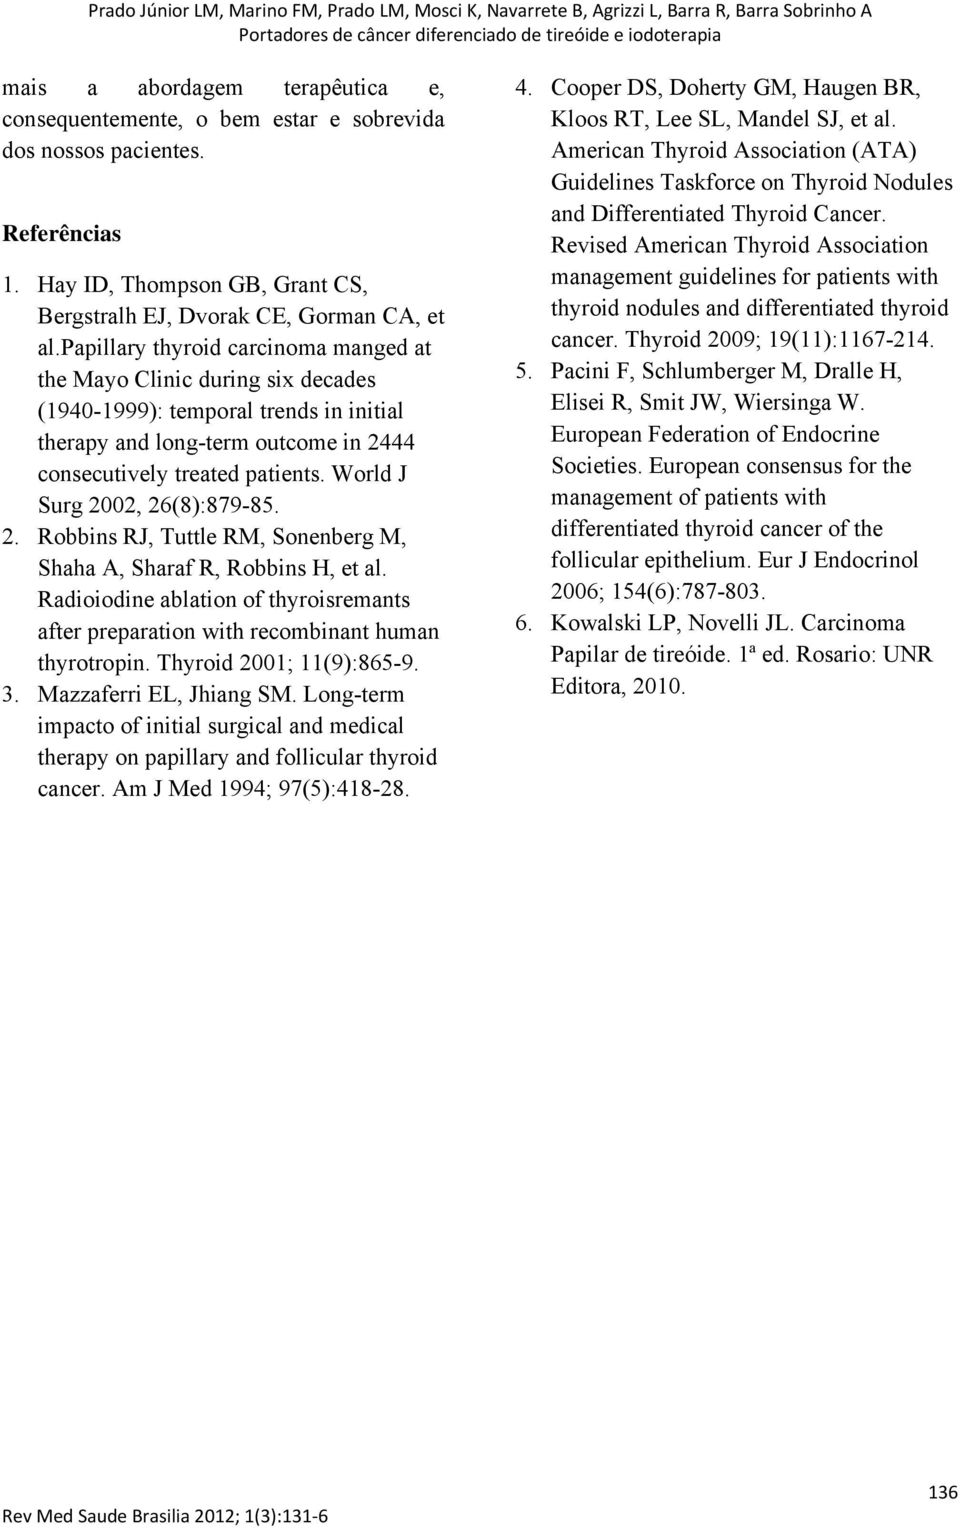 World J Surg 2, 26(8):879-85. 2. Robbins RJ, Tuttle RM, Sonenberg M, Shaha A, Sharaf R, Robbins H, et al. Radioiodine ablation of thyroisremants after preparation with recombinant human thyrotropin.